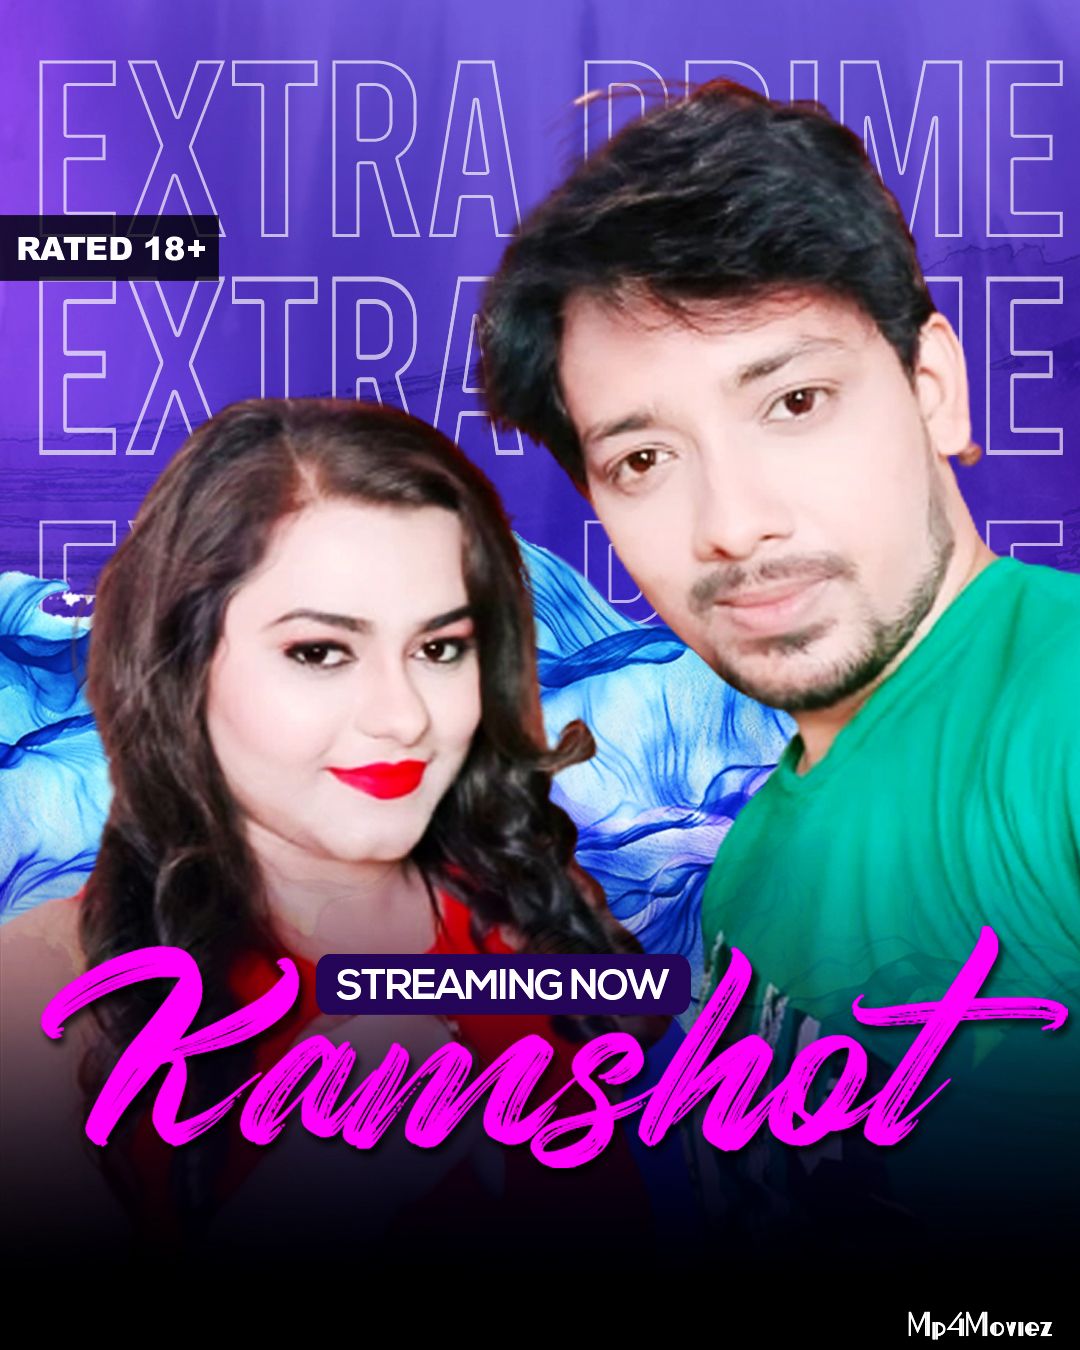 KamShot (2021) Hindi ExtraPrime Short Film HDRip download full movie